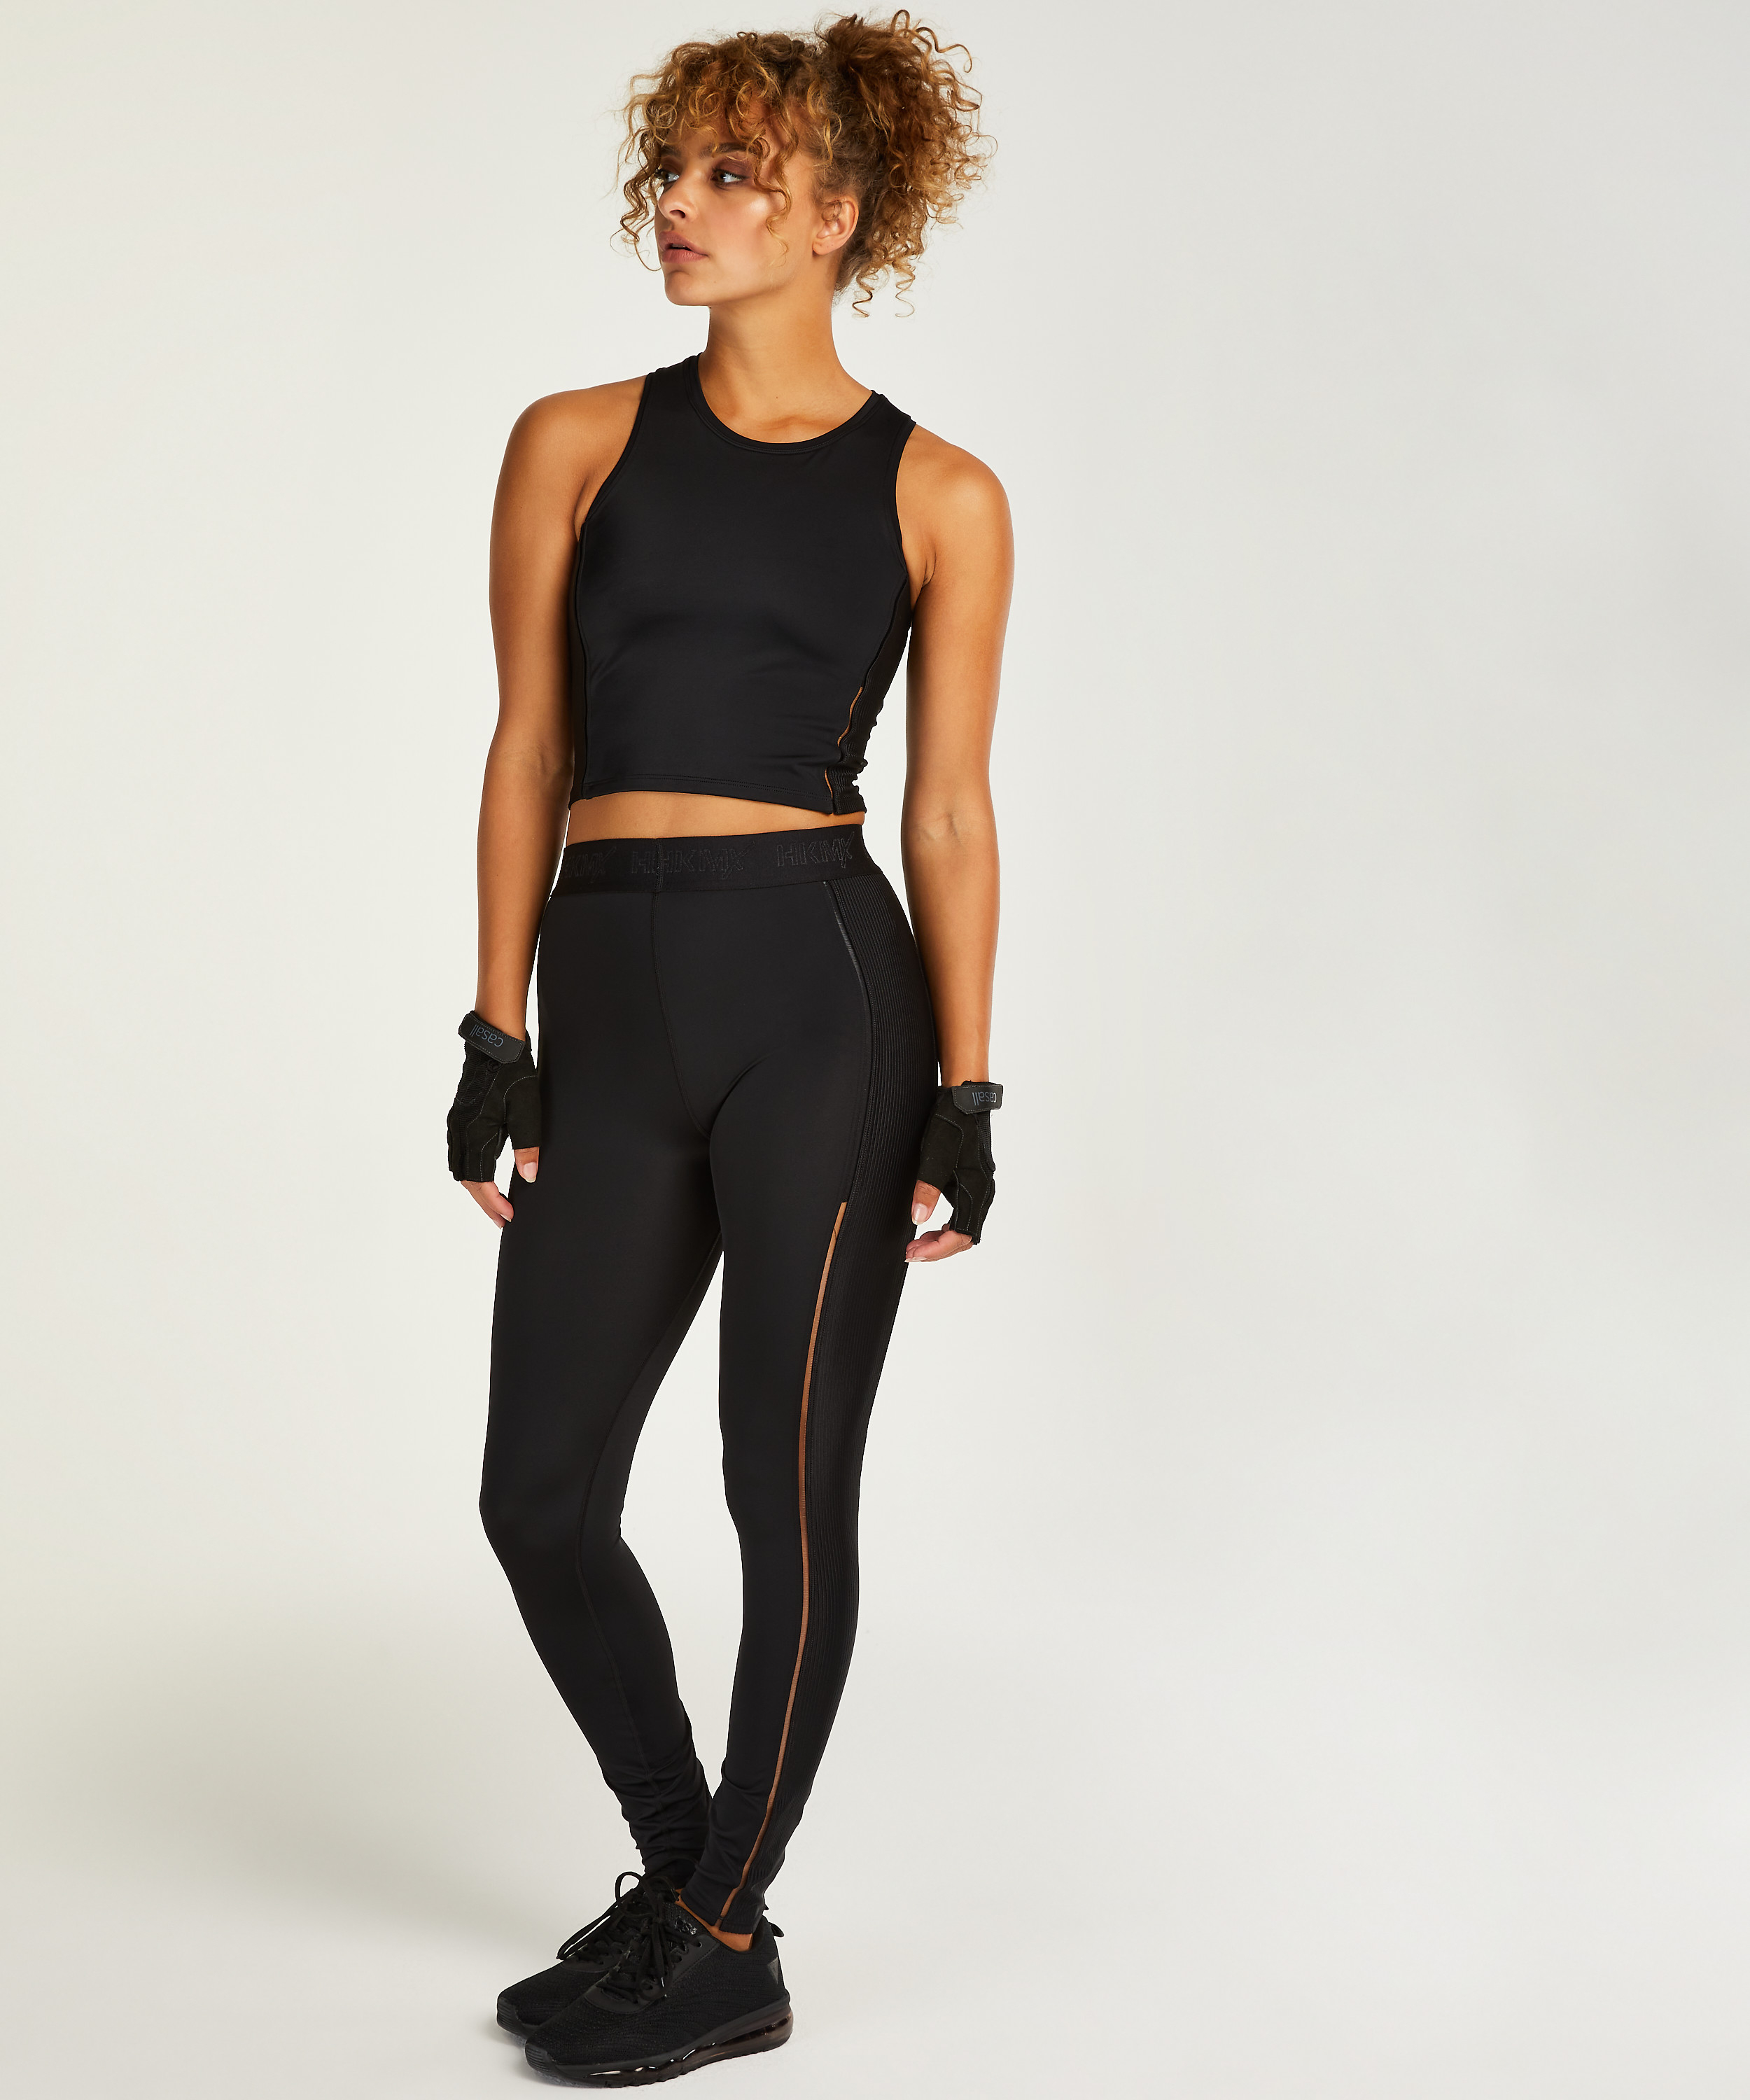 HKMX High-waisted sports leggings Zenna, Black, main